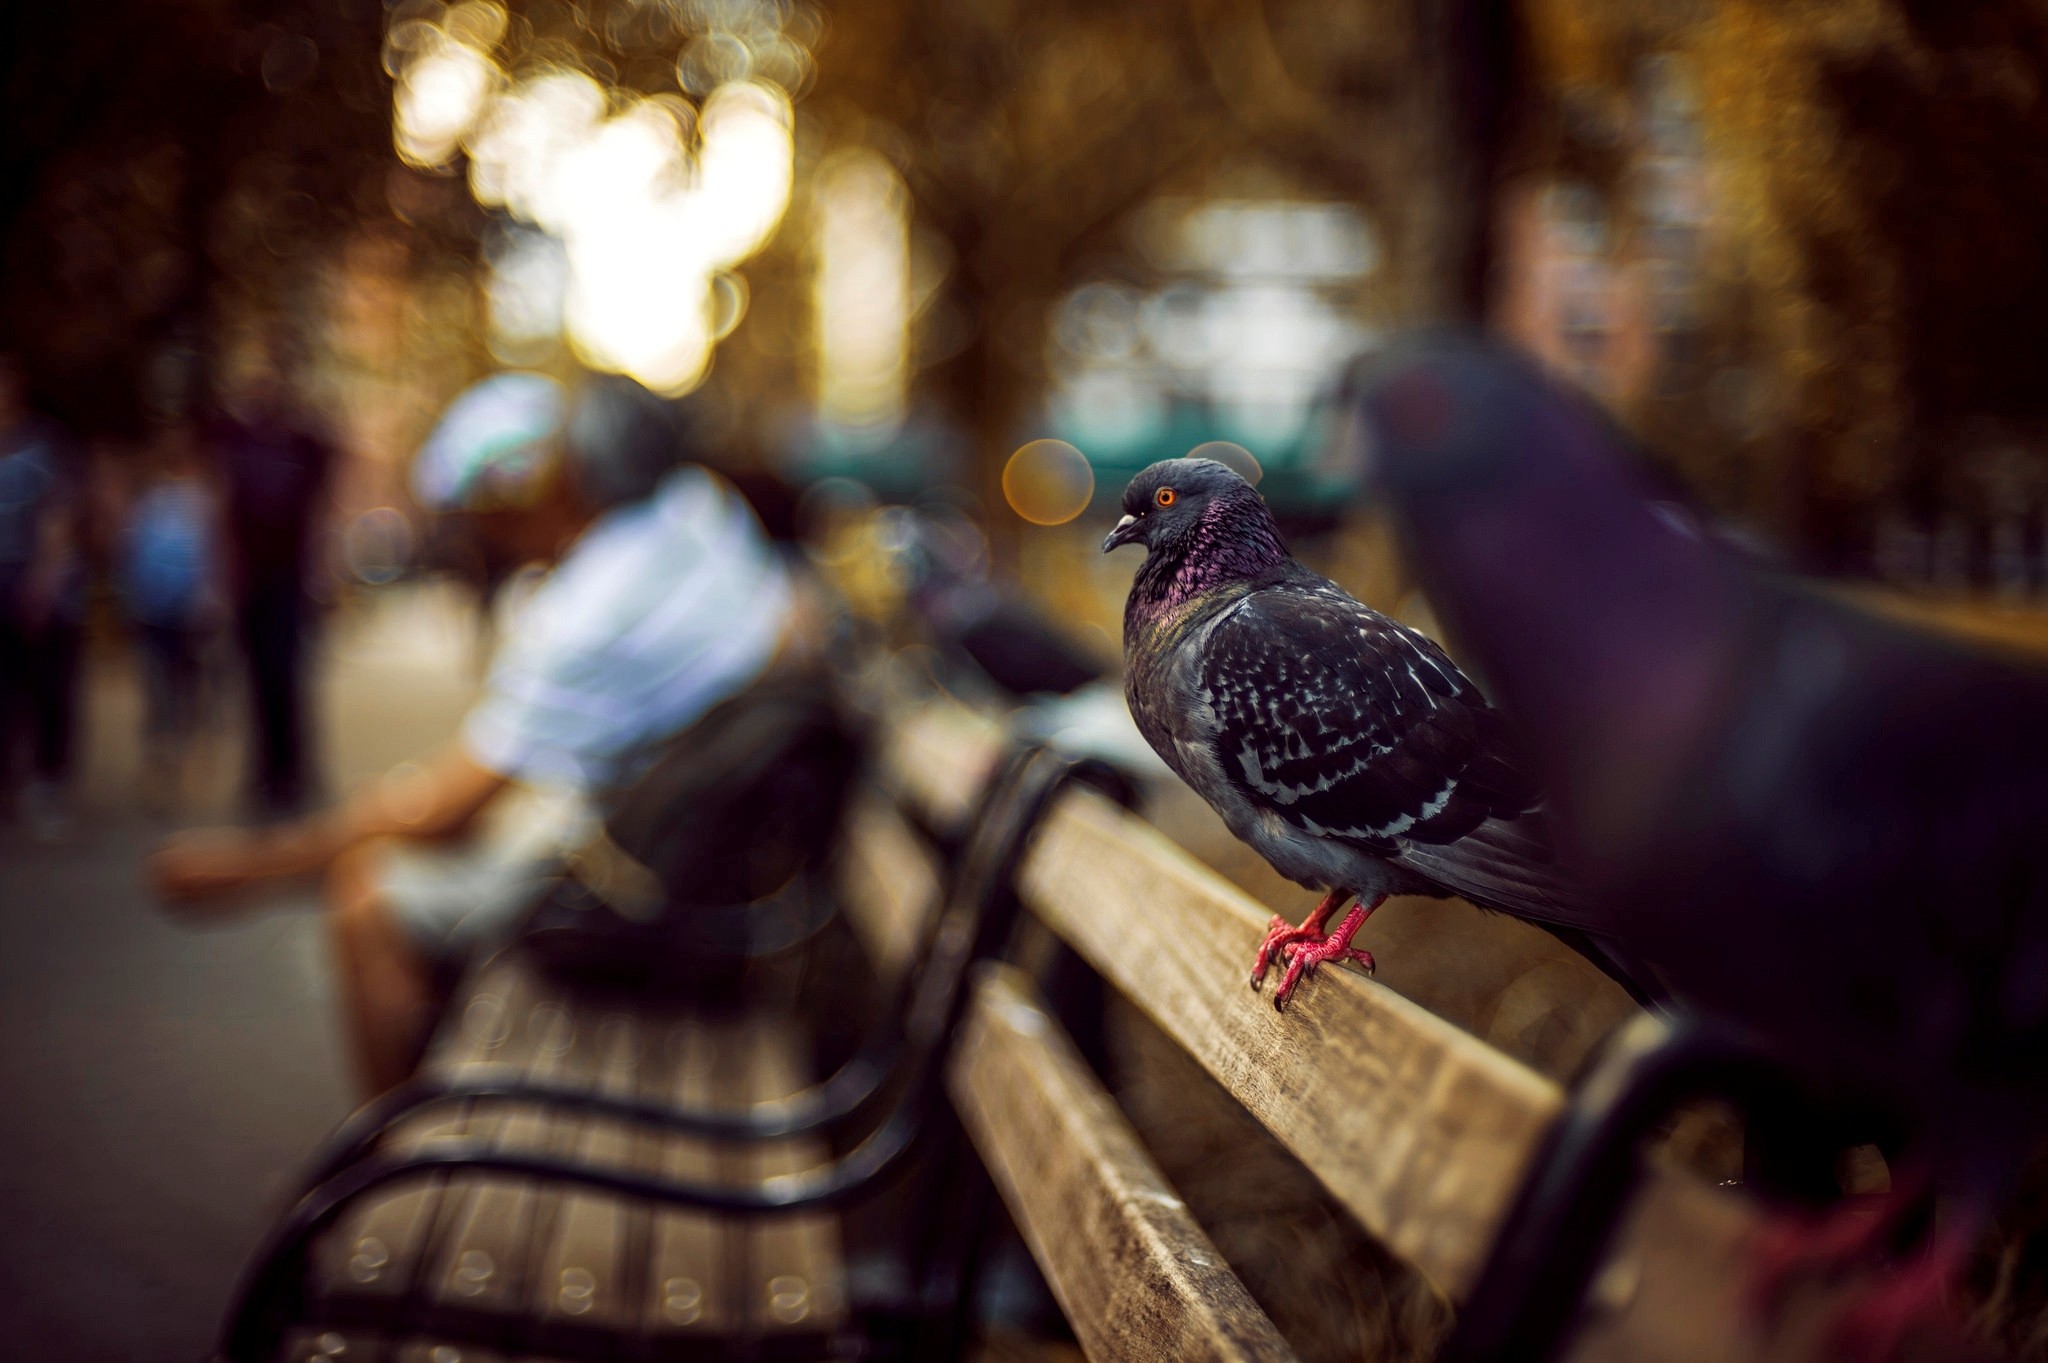 General 2048x1363 urban city birds pigeons bench depth of field